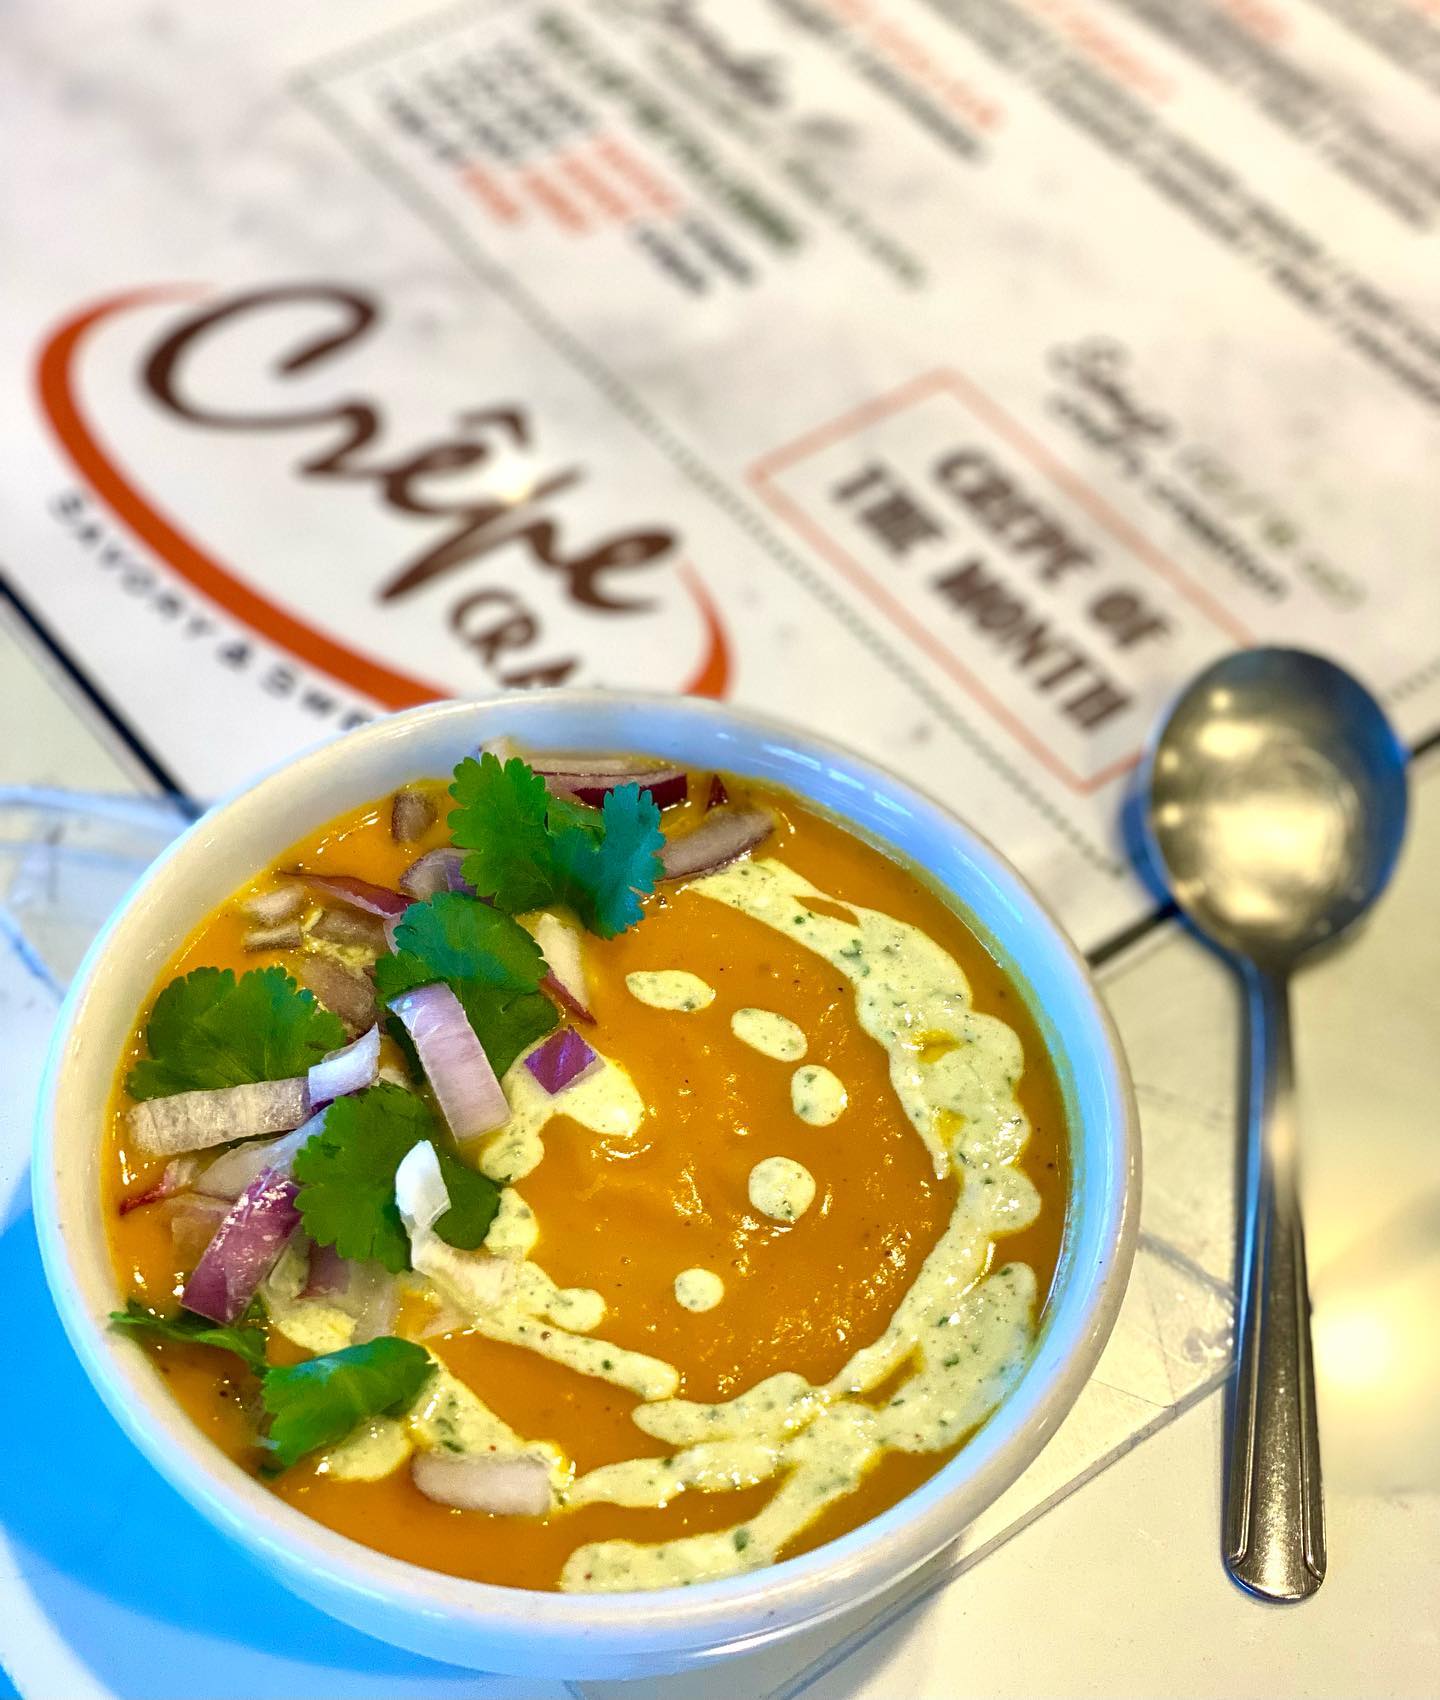 A bowl of soup sitting on a Crepe Crazy menu